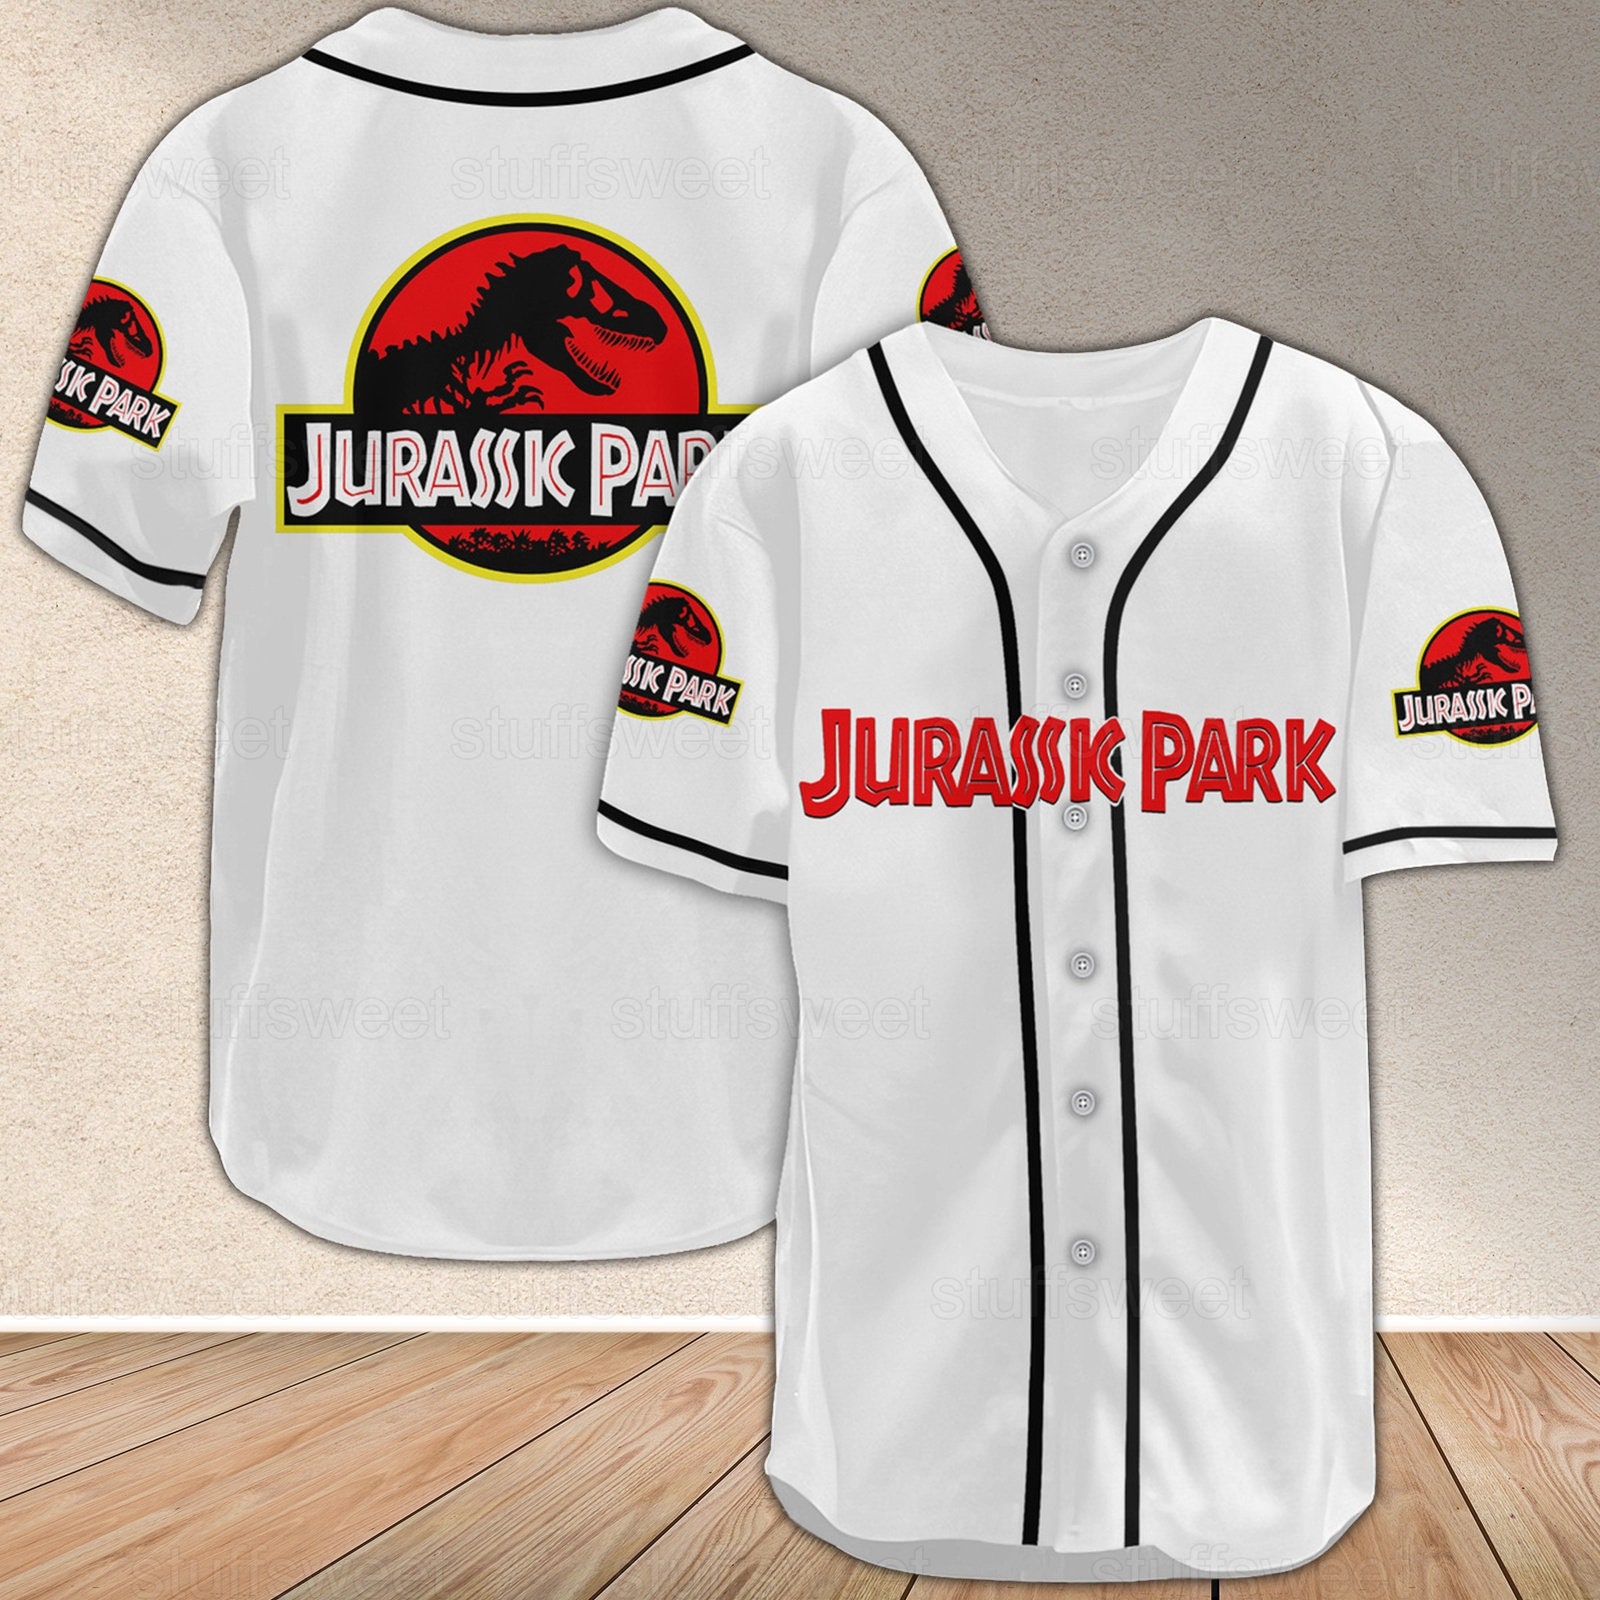 Jurassic Park Baseball Shirt, Jurassic World Baseball Jersey Shirt